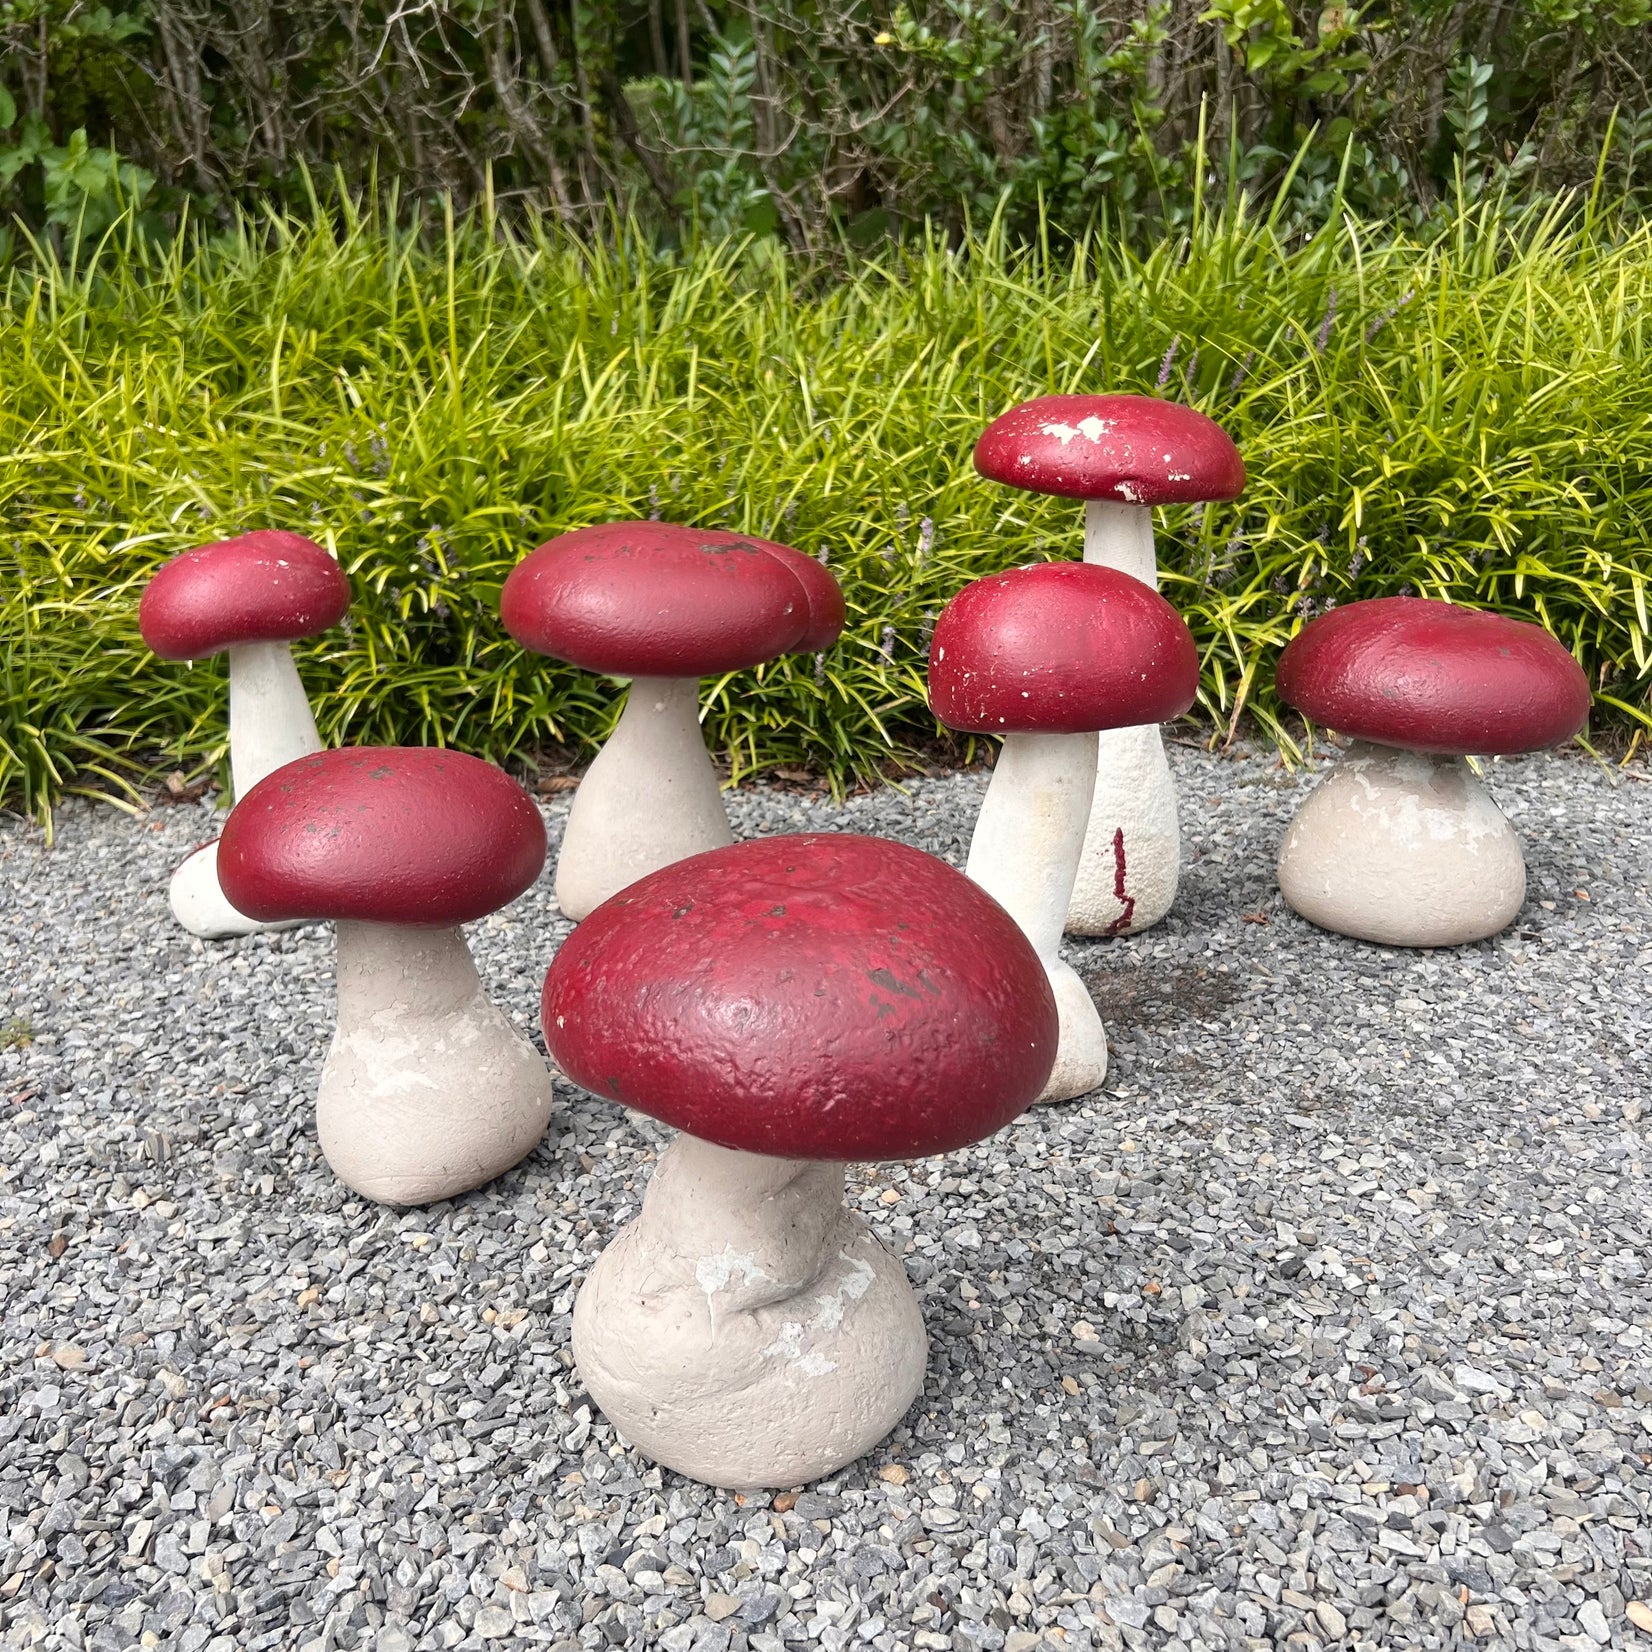 Set of 7 Concrete Garden Mushrooms, 1950s France